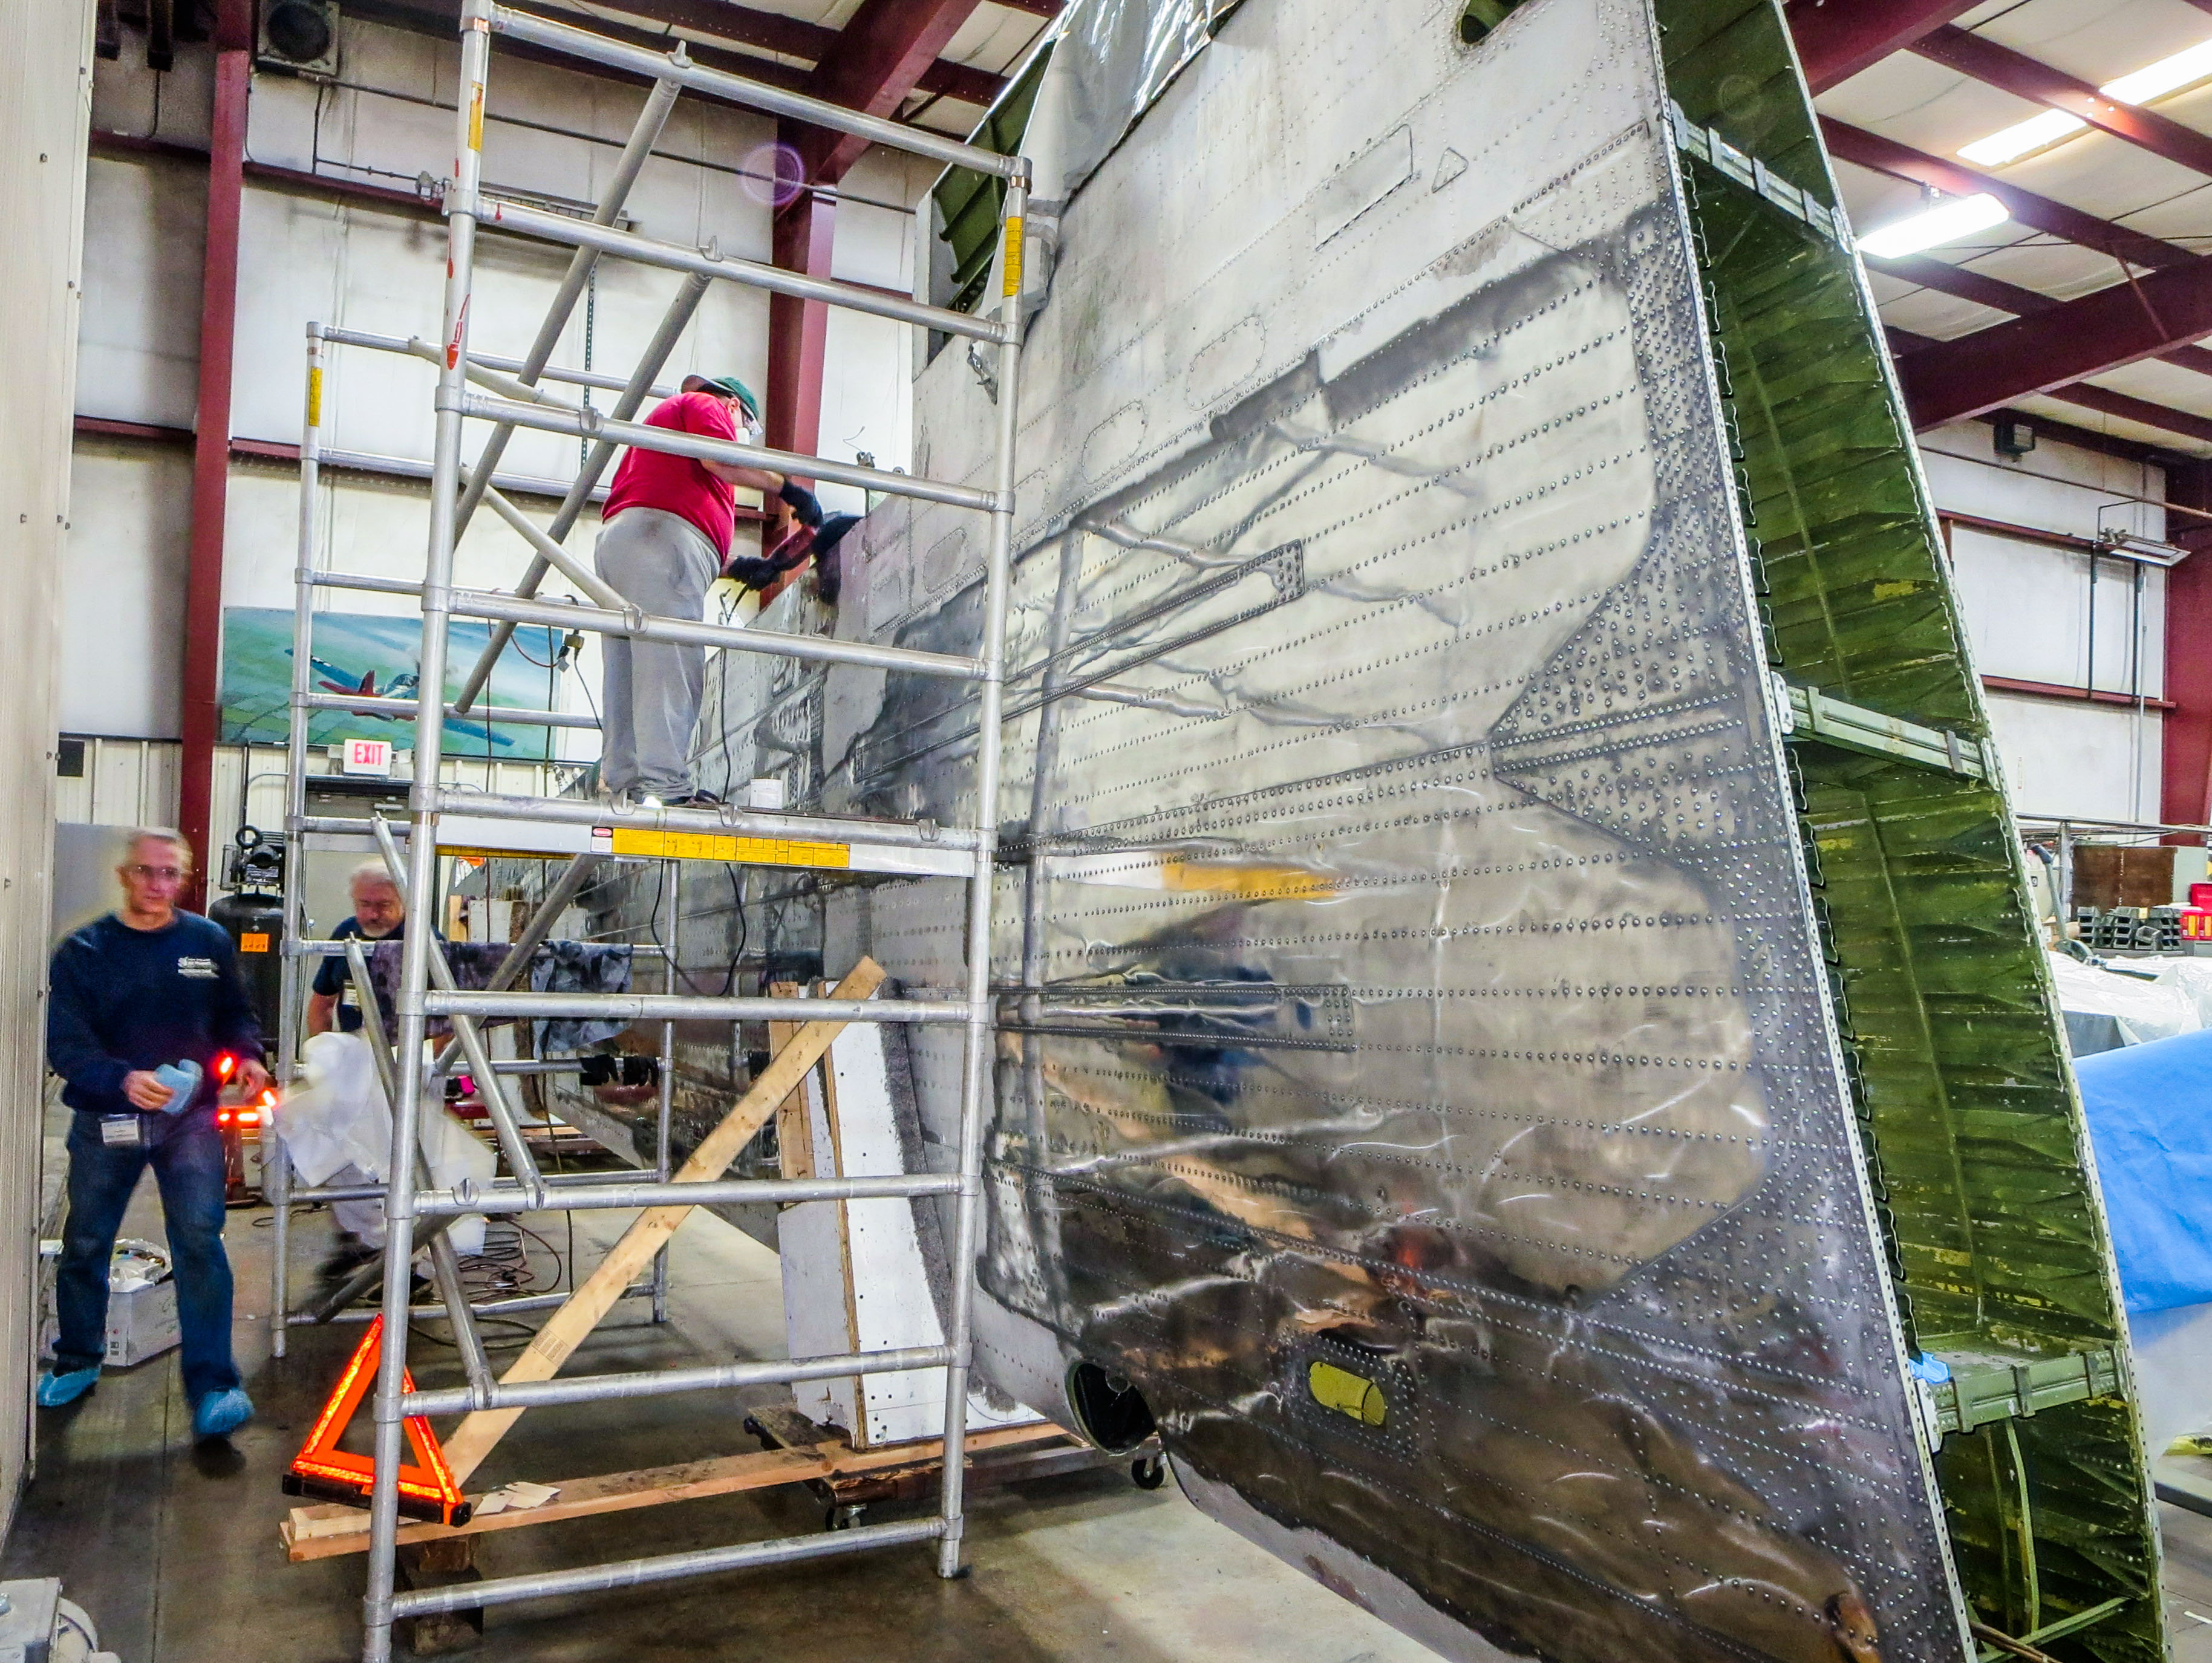 Members of the restoration team soon got to work polishing the left wing. (photo via NEAM)